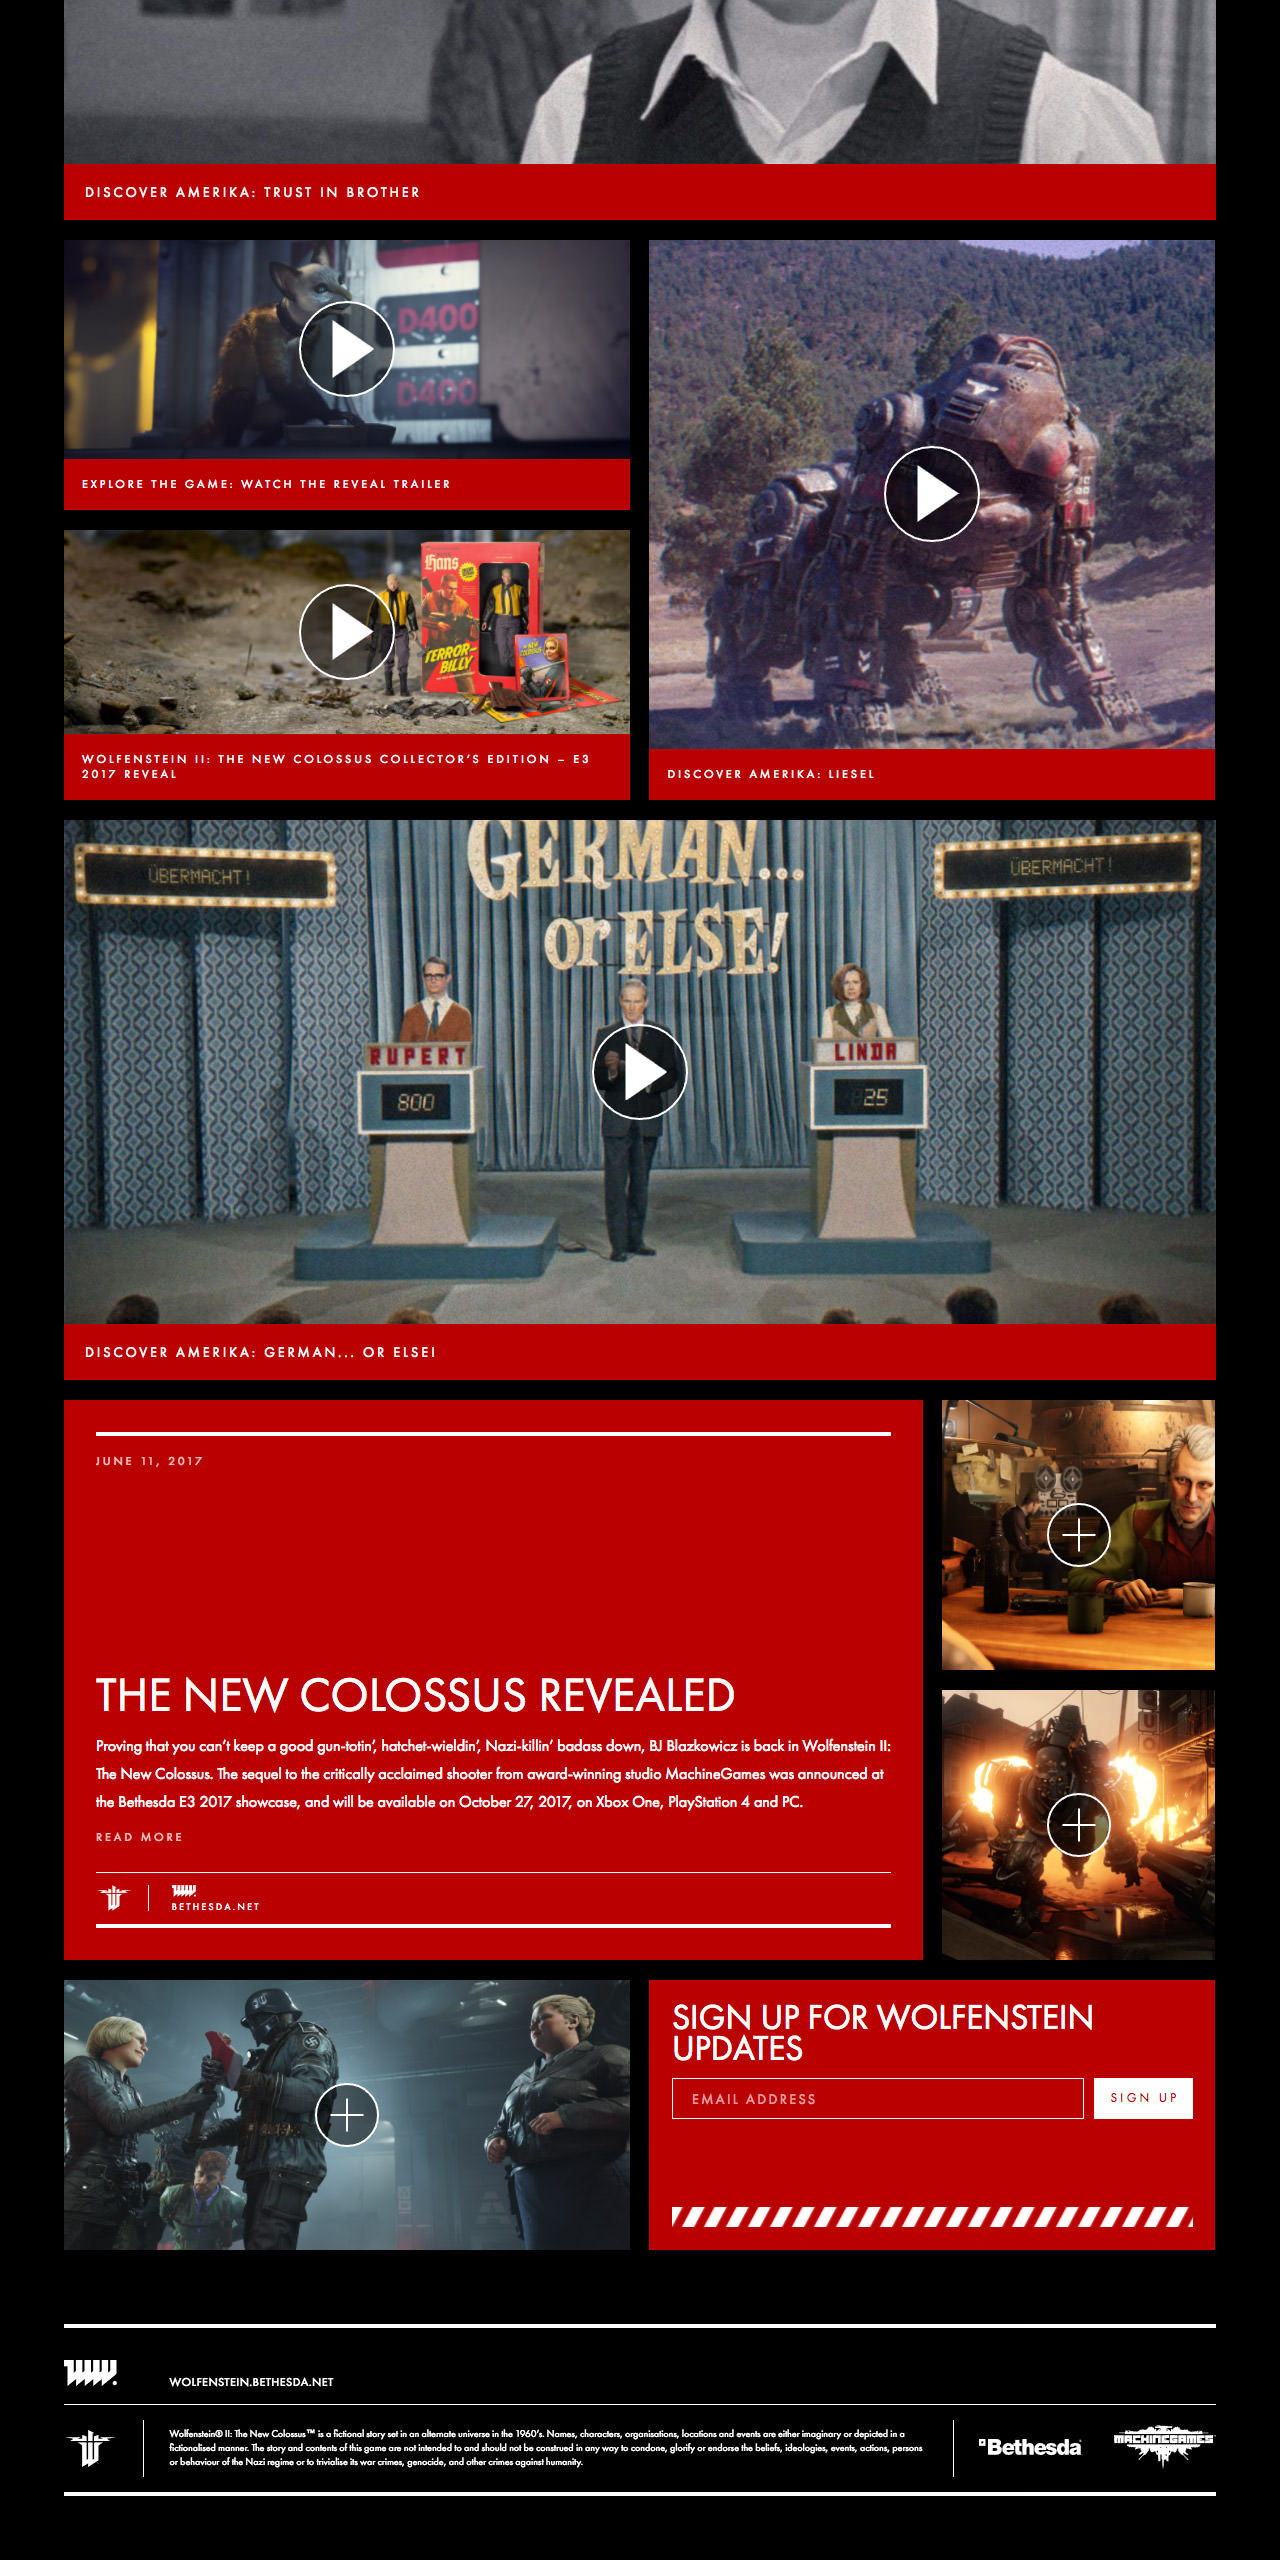 Homepage design for the Wolfenstein II site